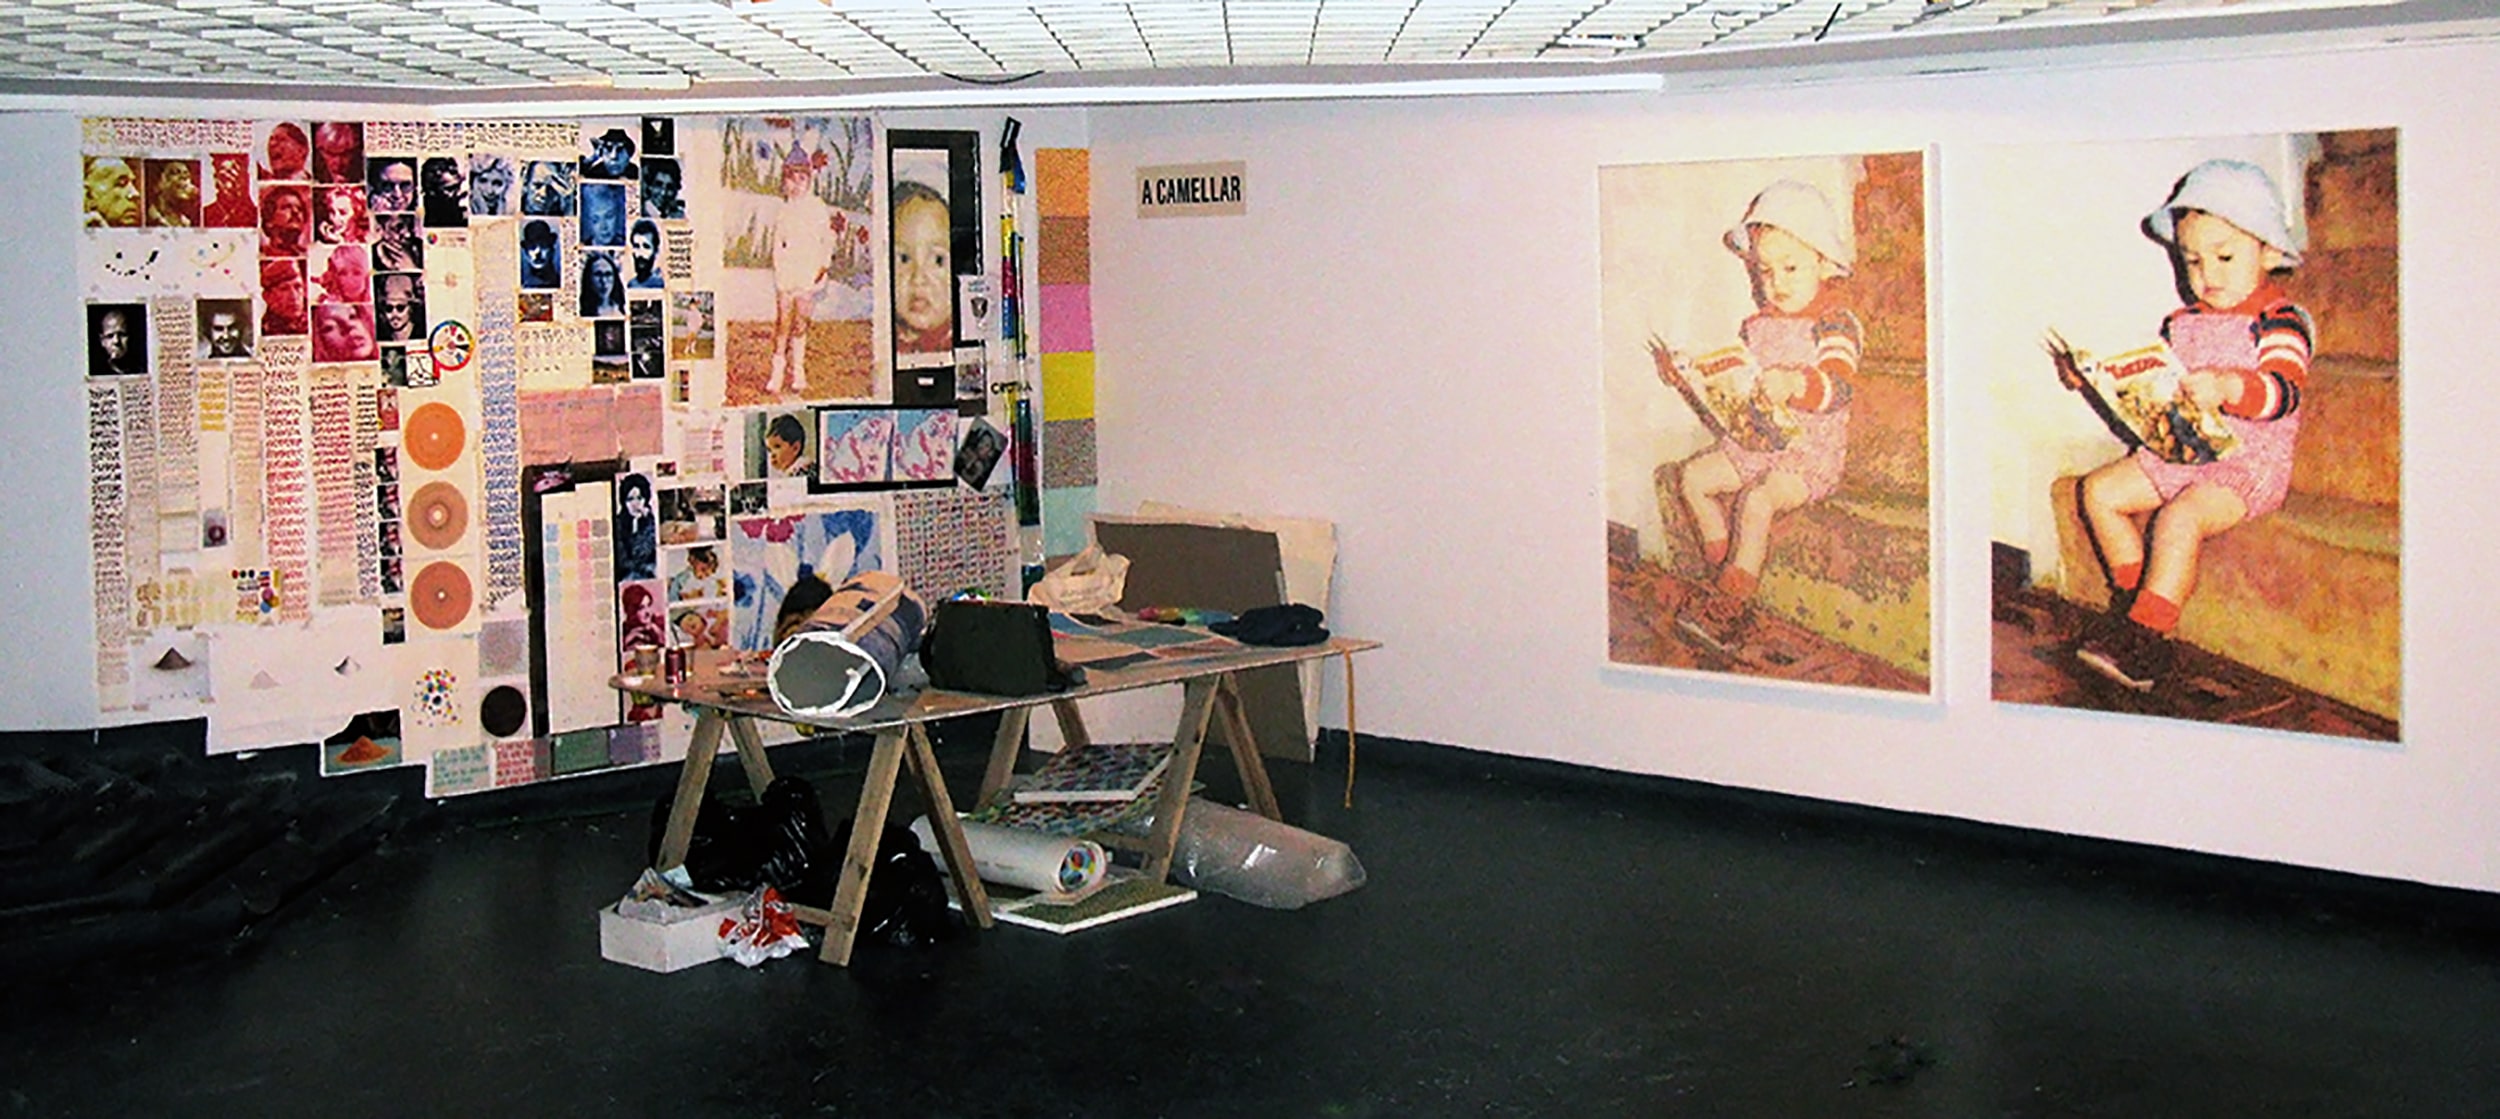 CHROMA studio workshop esteban peña art